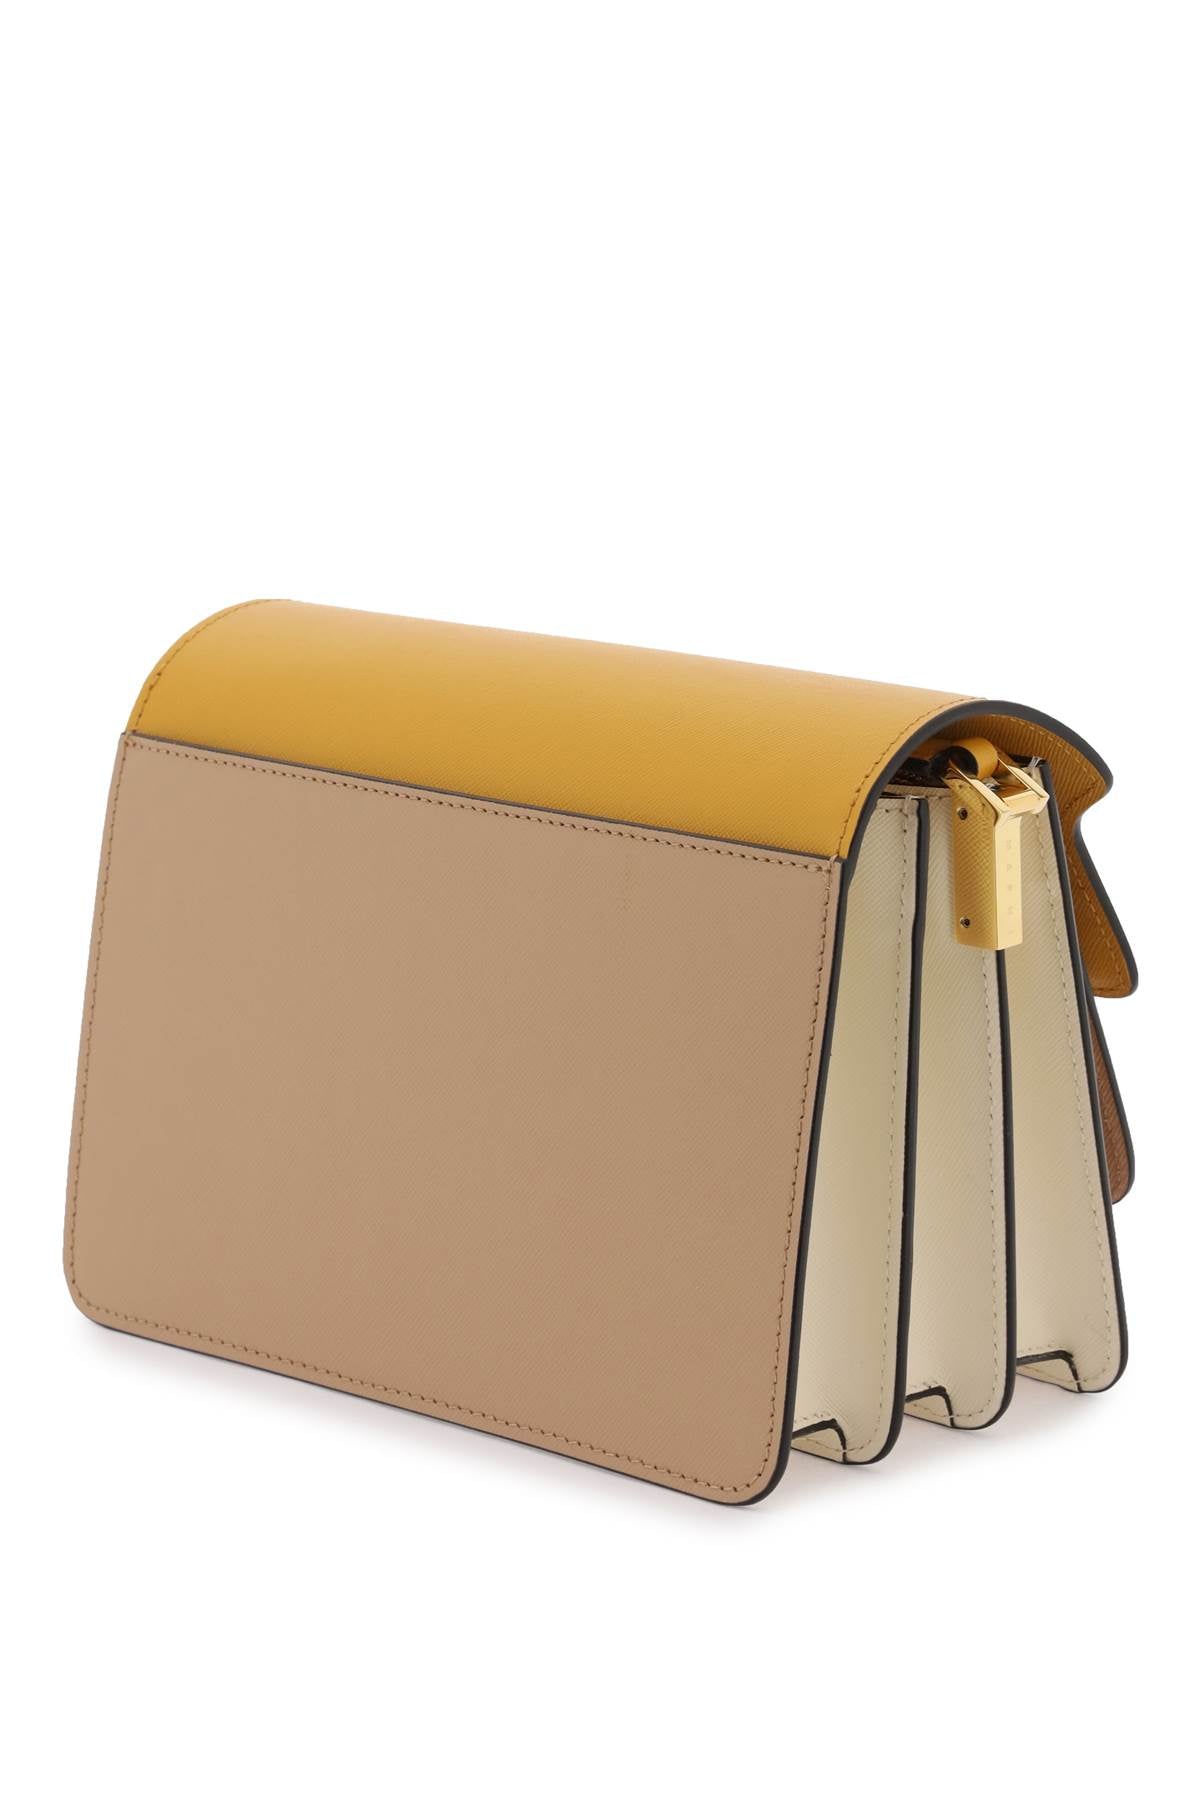 MARNI Tricolor Saffiano Leather Medium Trunk Crossbody Handbag with Gold-Tone Hardware